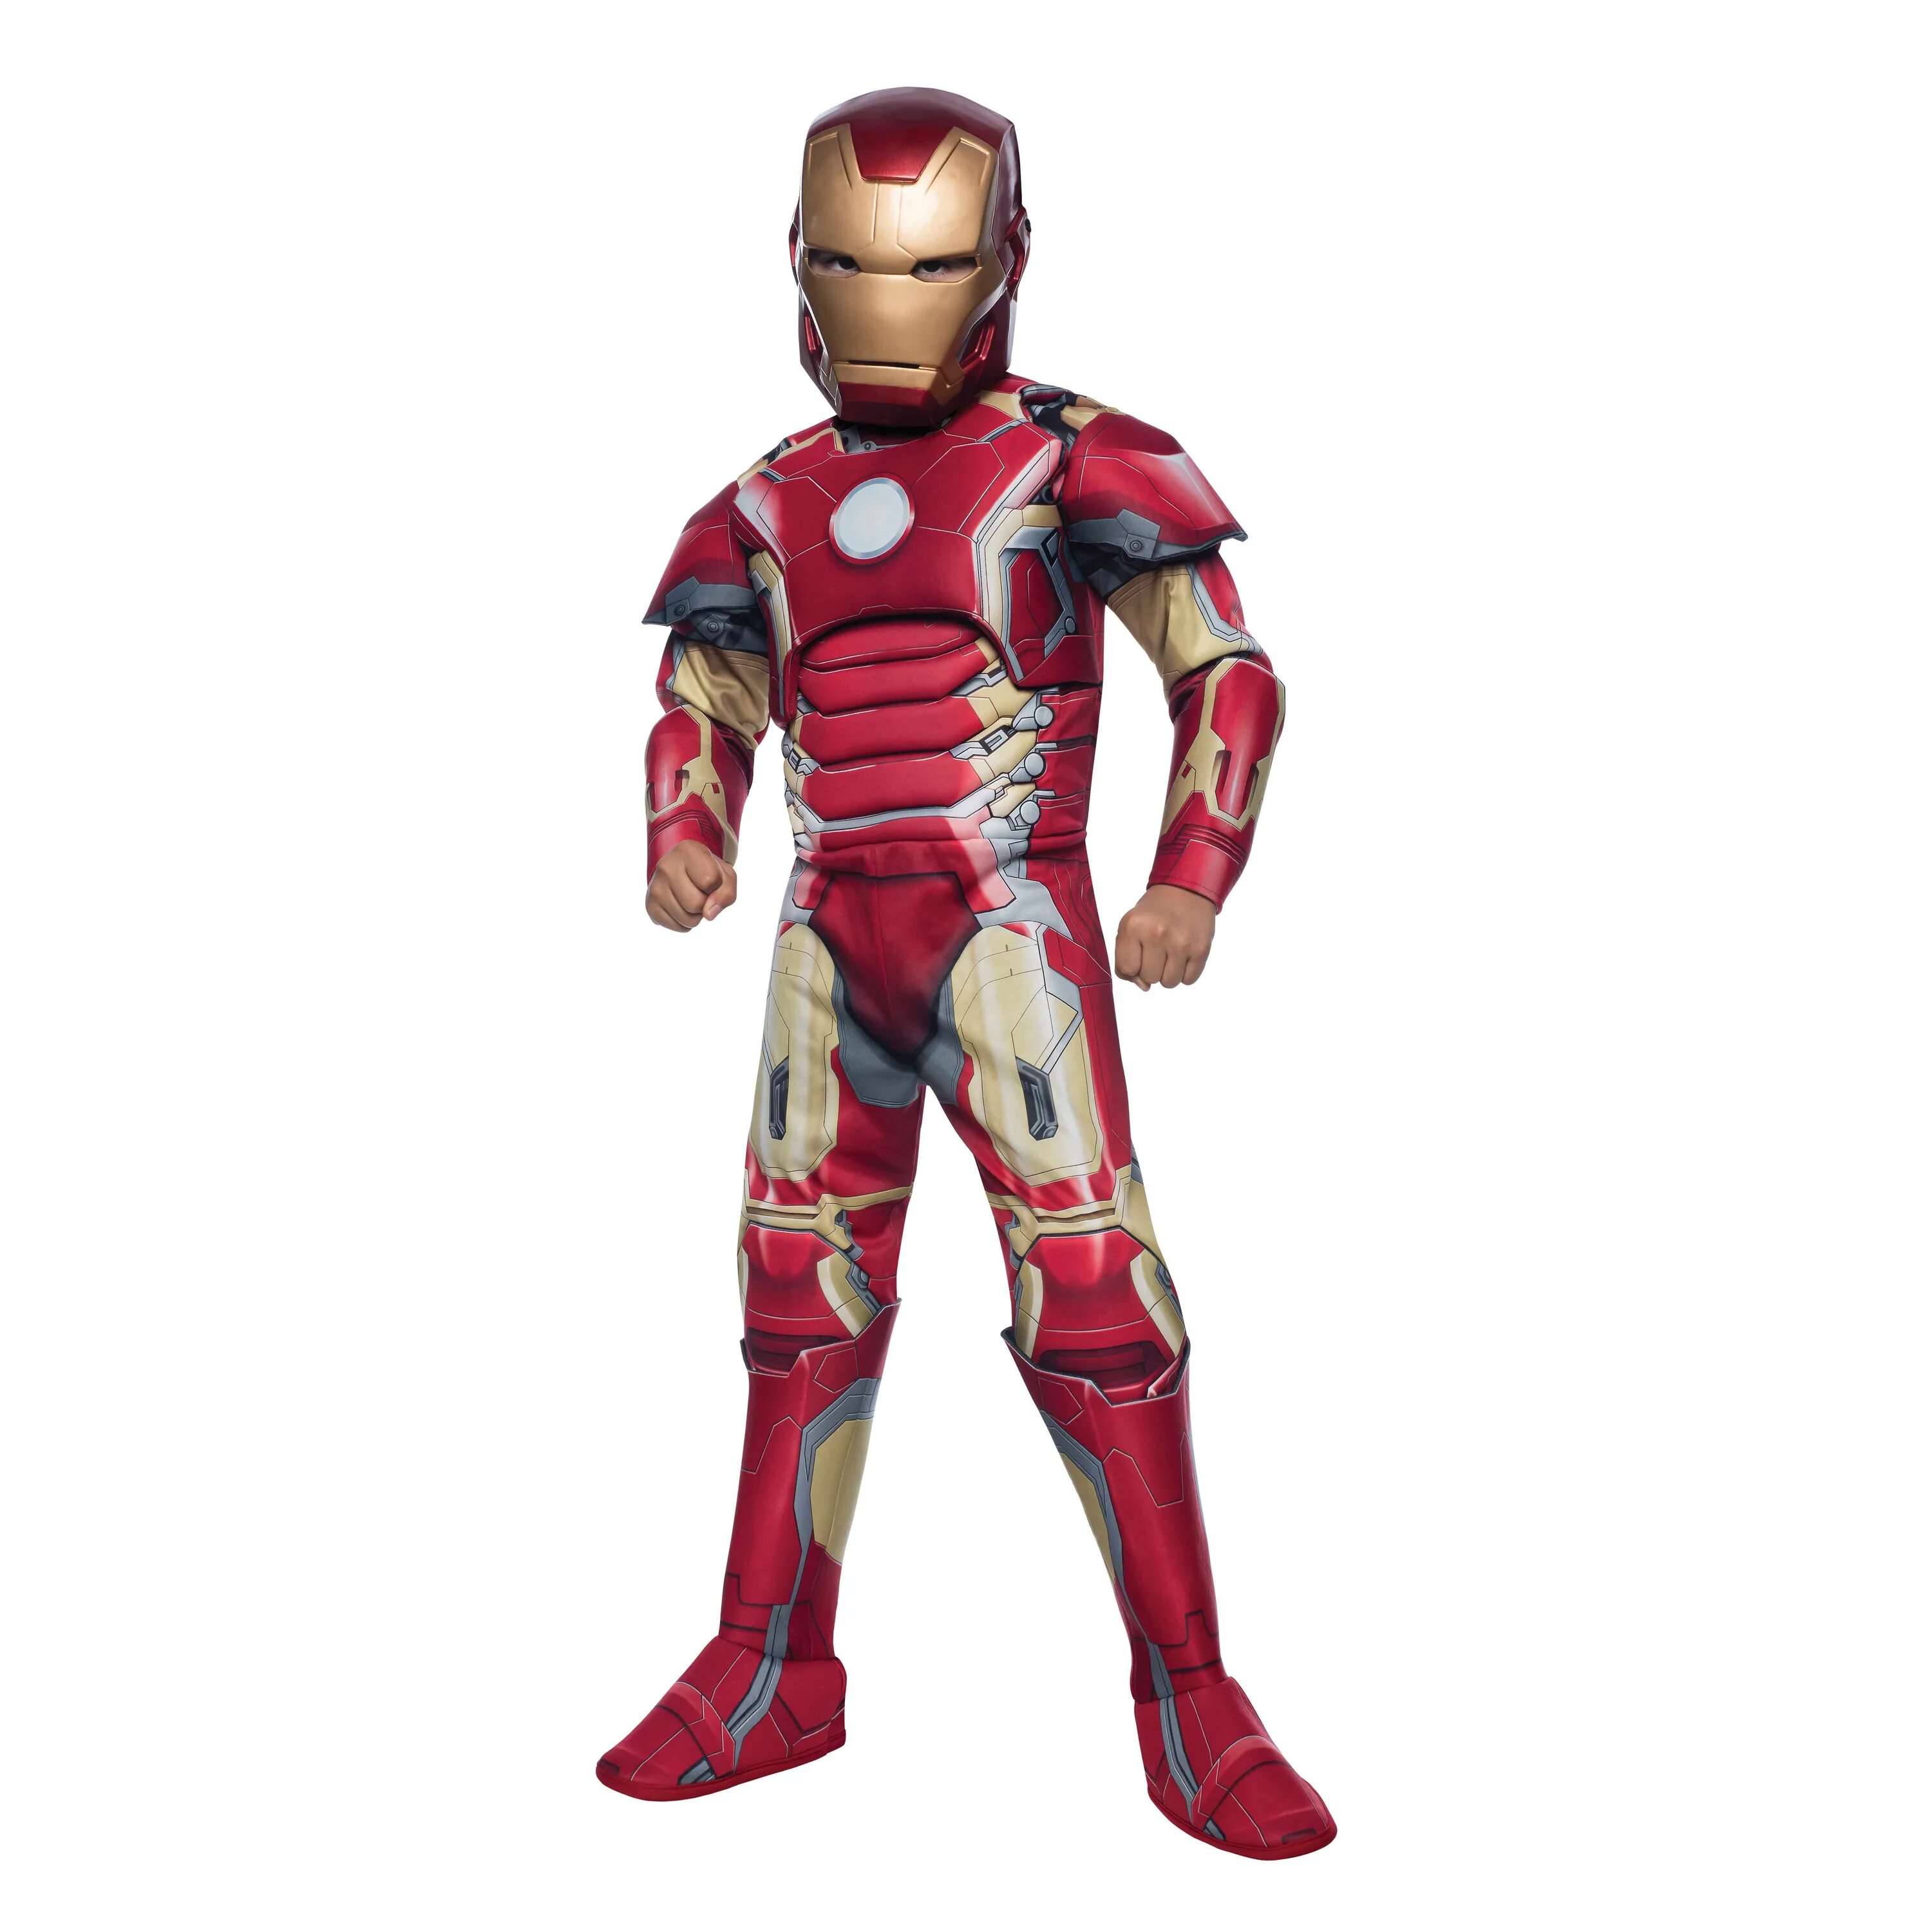 Дети железного человека. Карнавальный костюм Rubie's Железный человек Deluxe. Rubies костюм "Капитан Америка/Железный человек" Deluxe. Костюм железного человека для мальчика. Детский костюм железного человека.